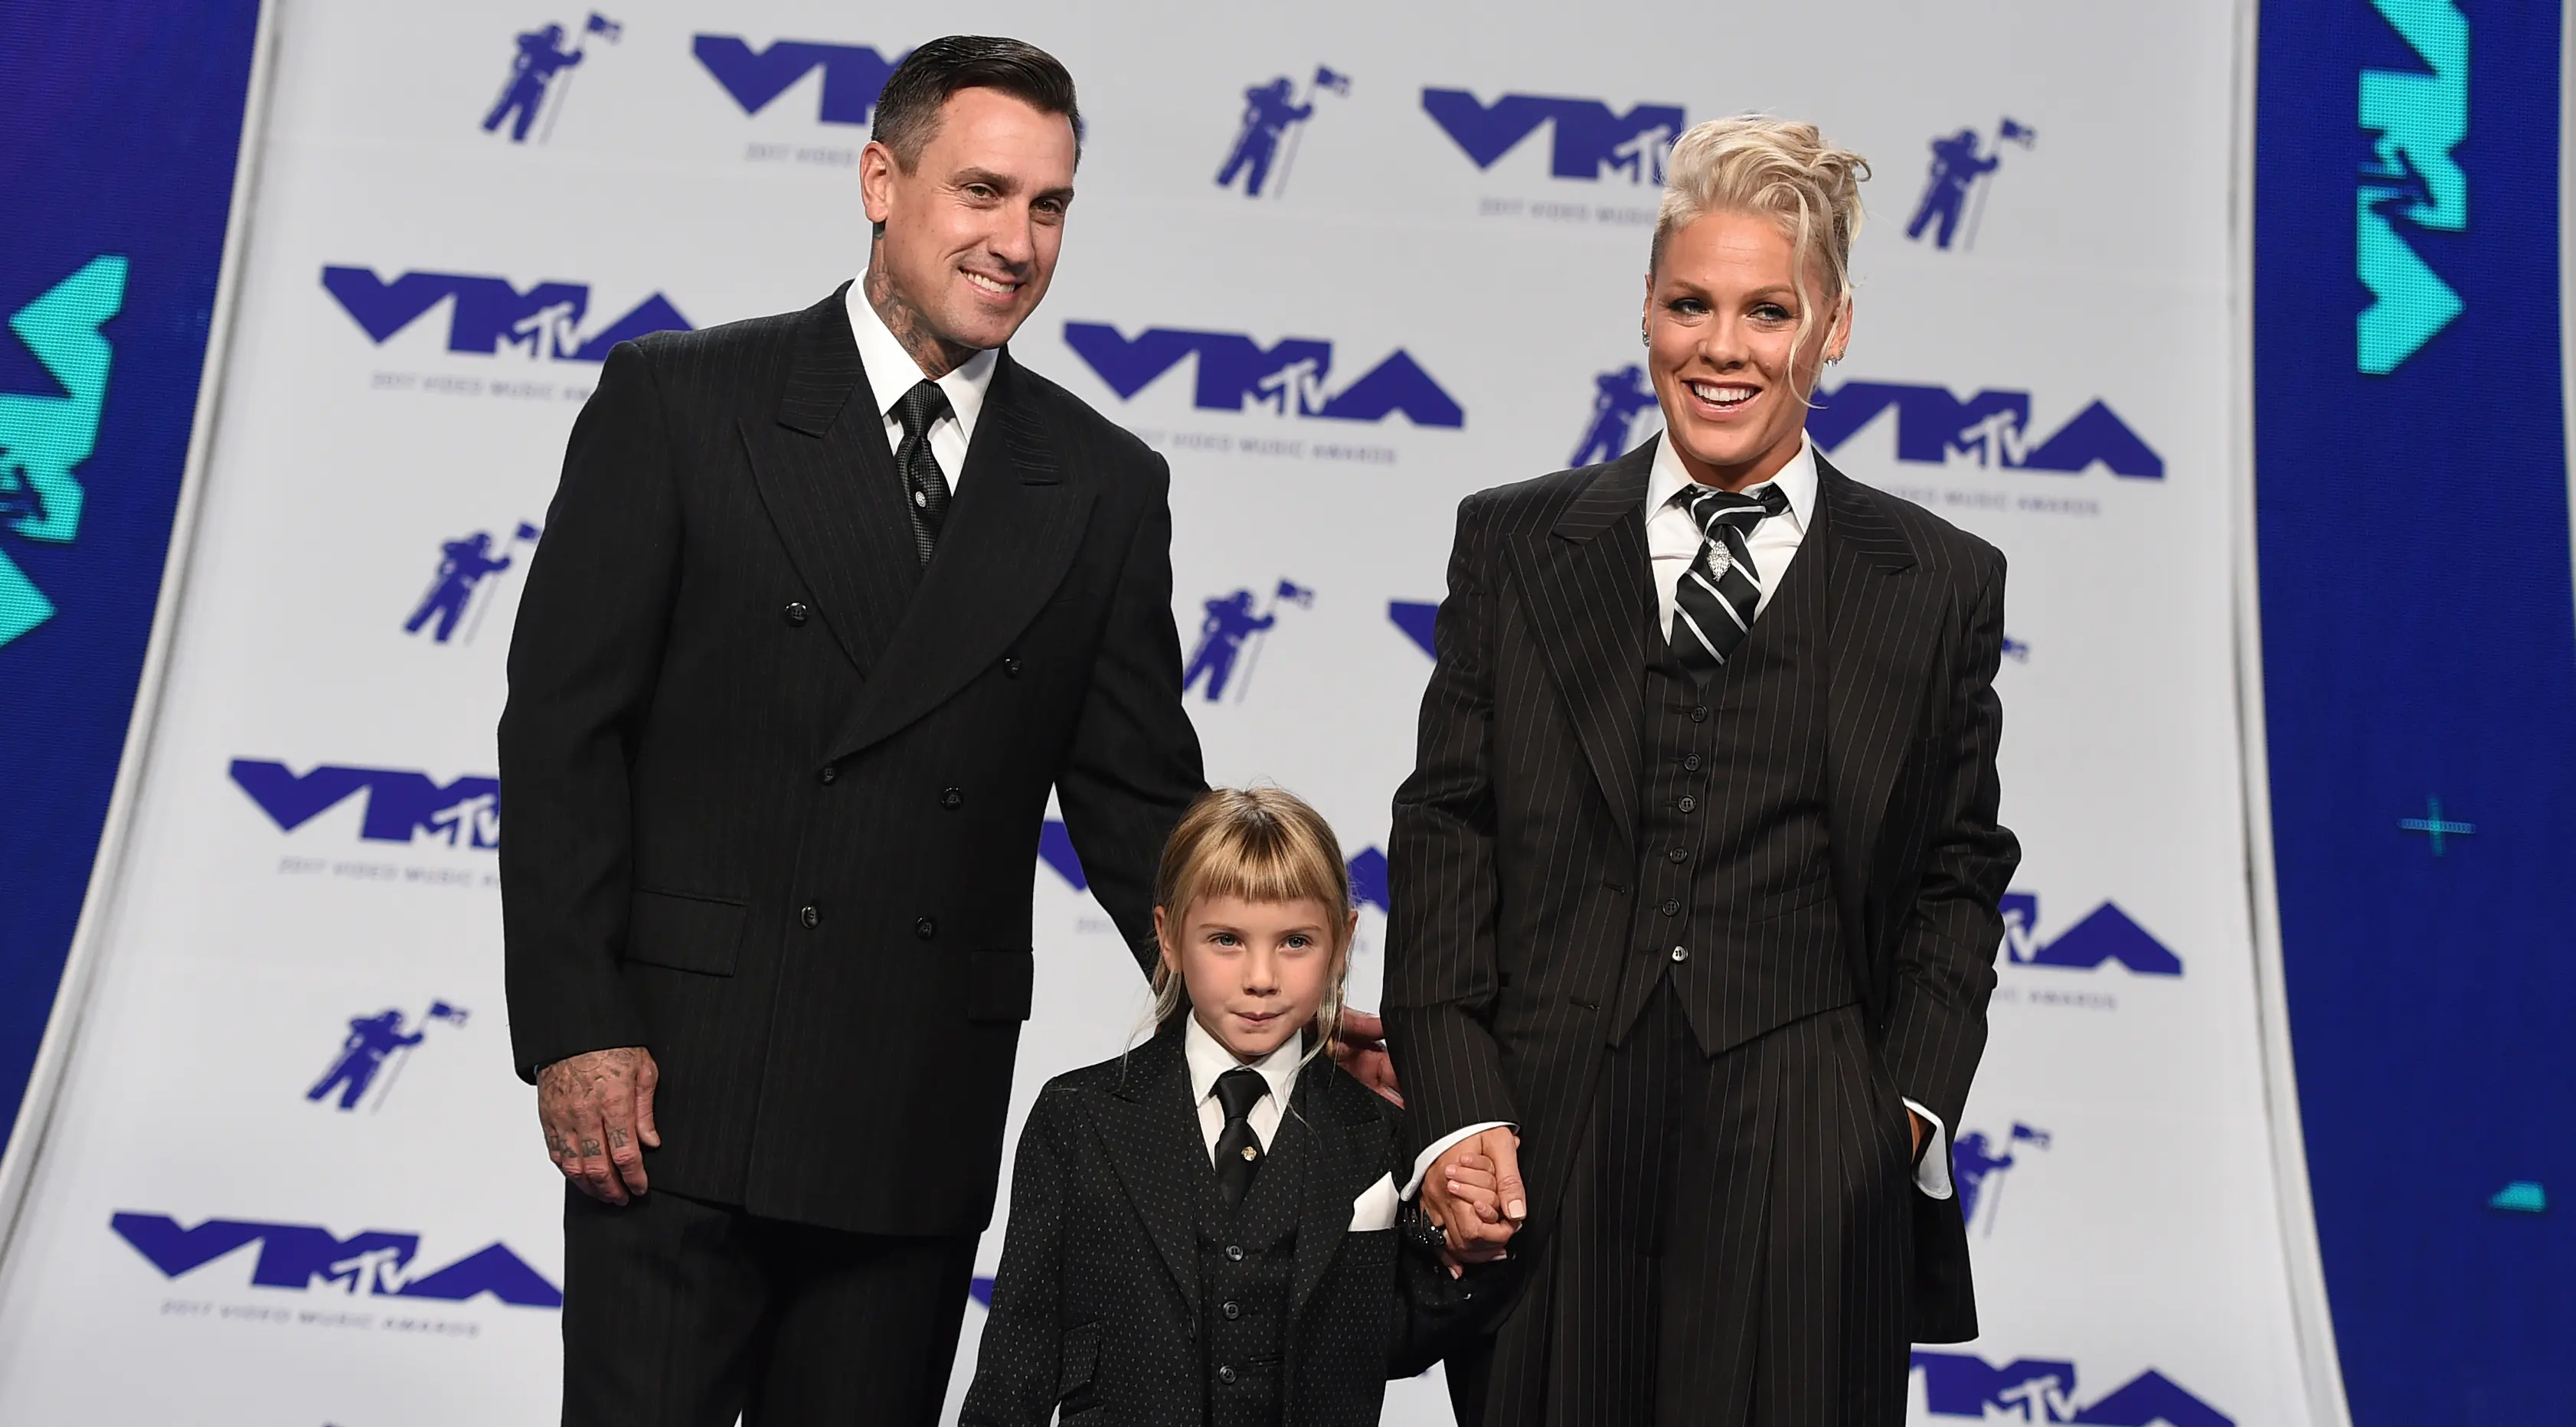 Pink bersama Carey Hart dan putri mereka, Willow menghadiri ajang MTV Video Music Awards (VMA) 2017 di California, Minggu (27/8). MTV VMA merupakan salah satu acara penghargaan musik yang paling dinanti selain Grammy Awards. (Jordan Strauss/Invision/AP)